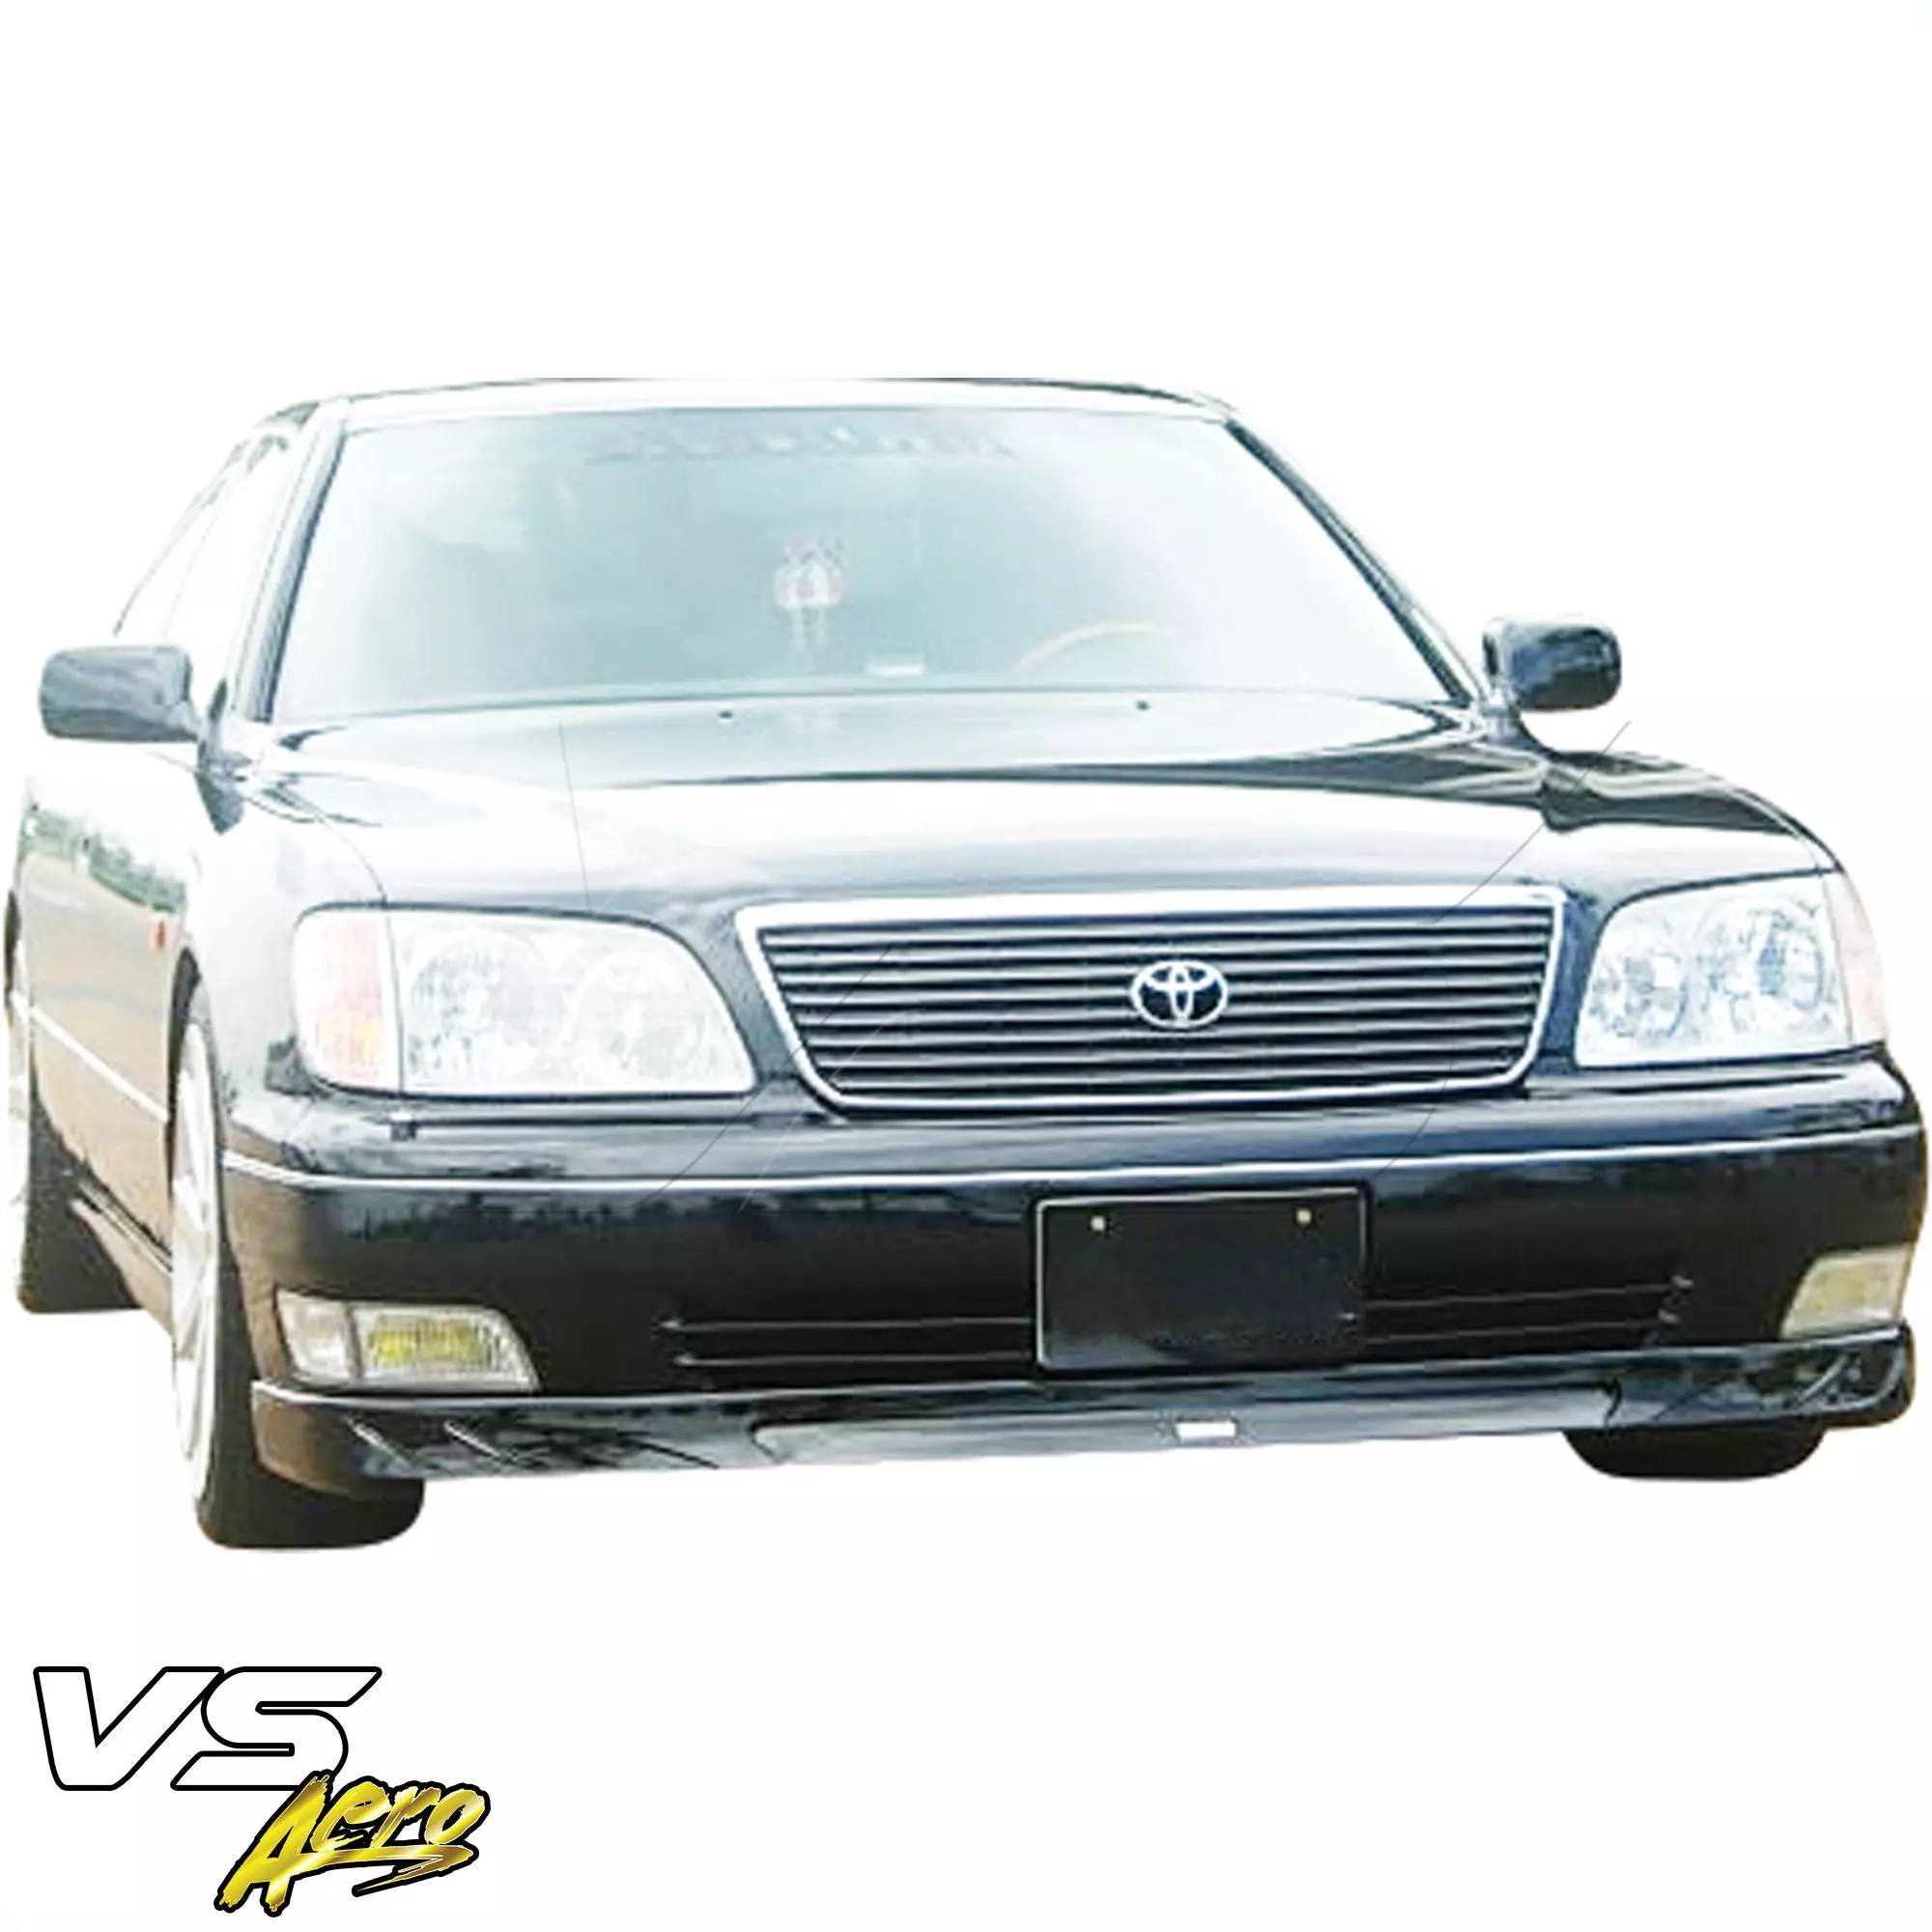 VSaero FRP FKON Body Kit 4pc > Lexus LS Series LS400 UCF21 1998-2000 - Image 8